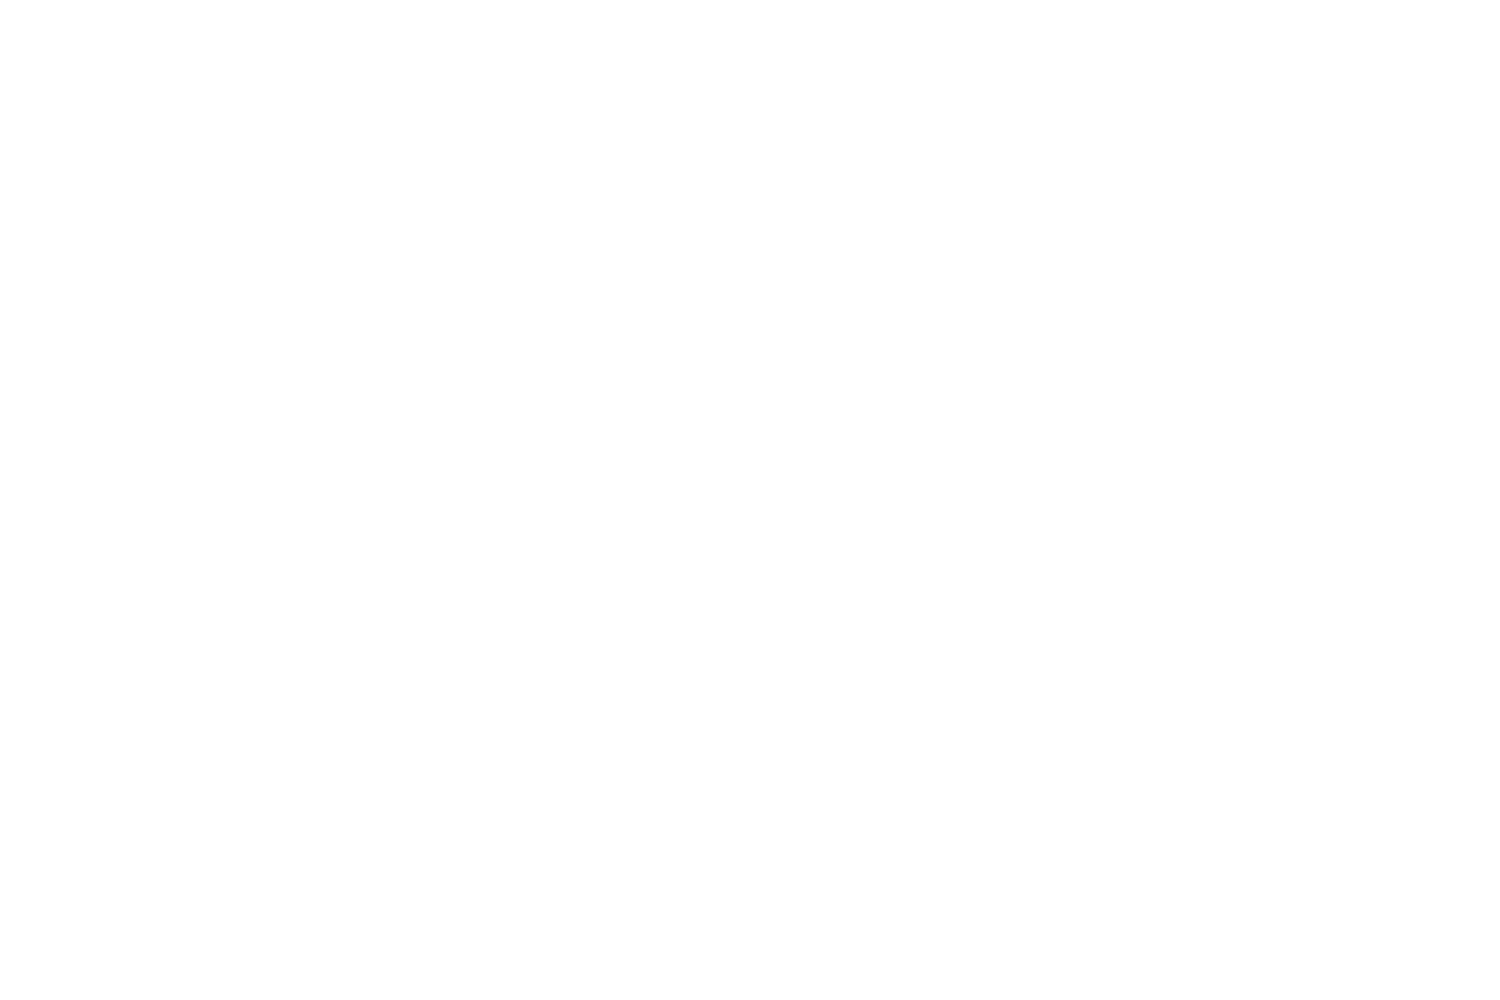 www.blinkmotorsport.com